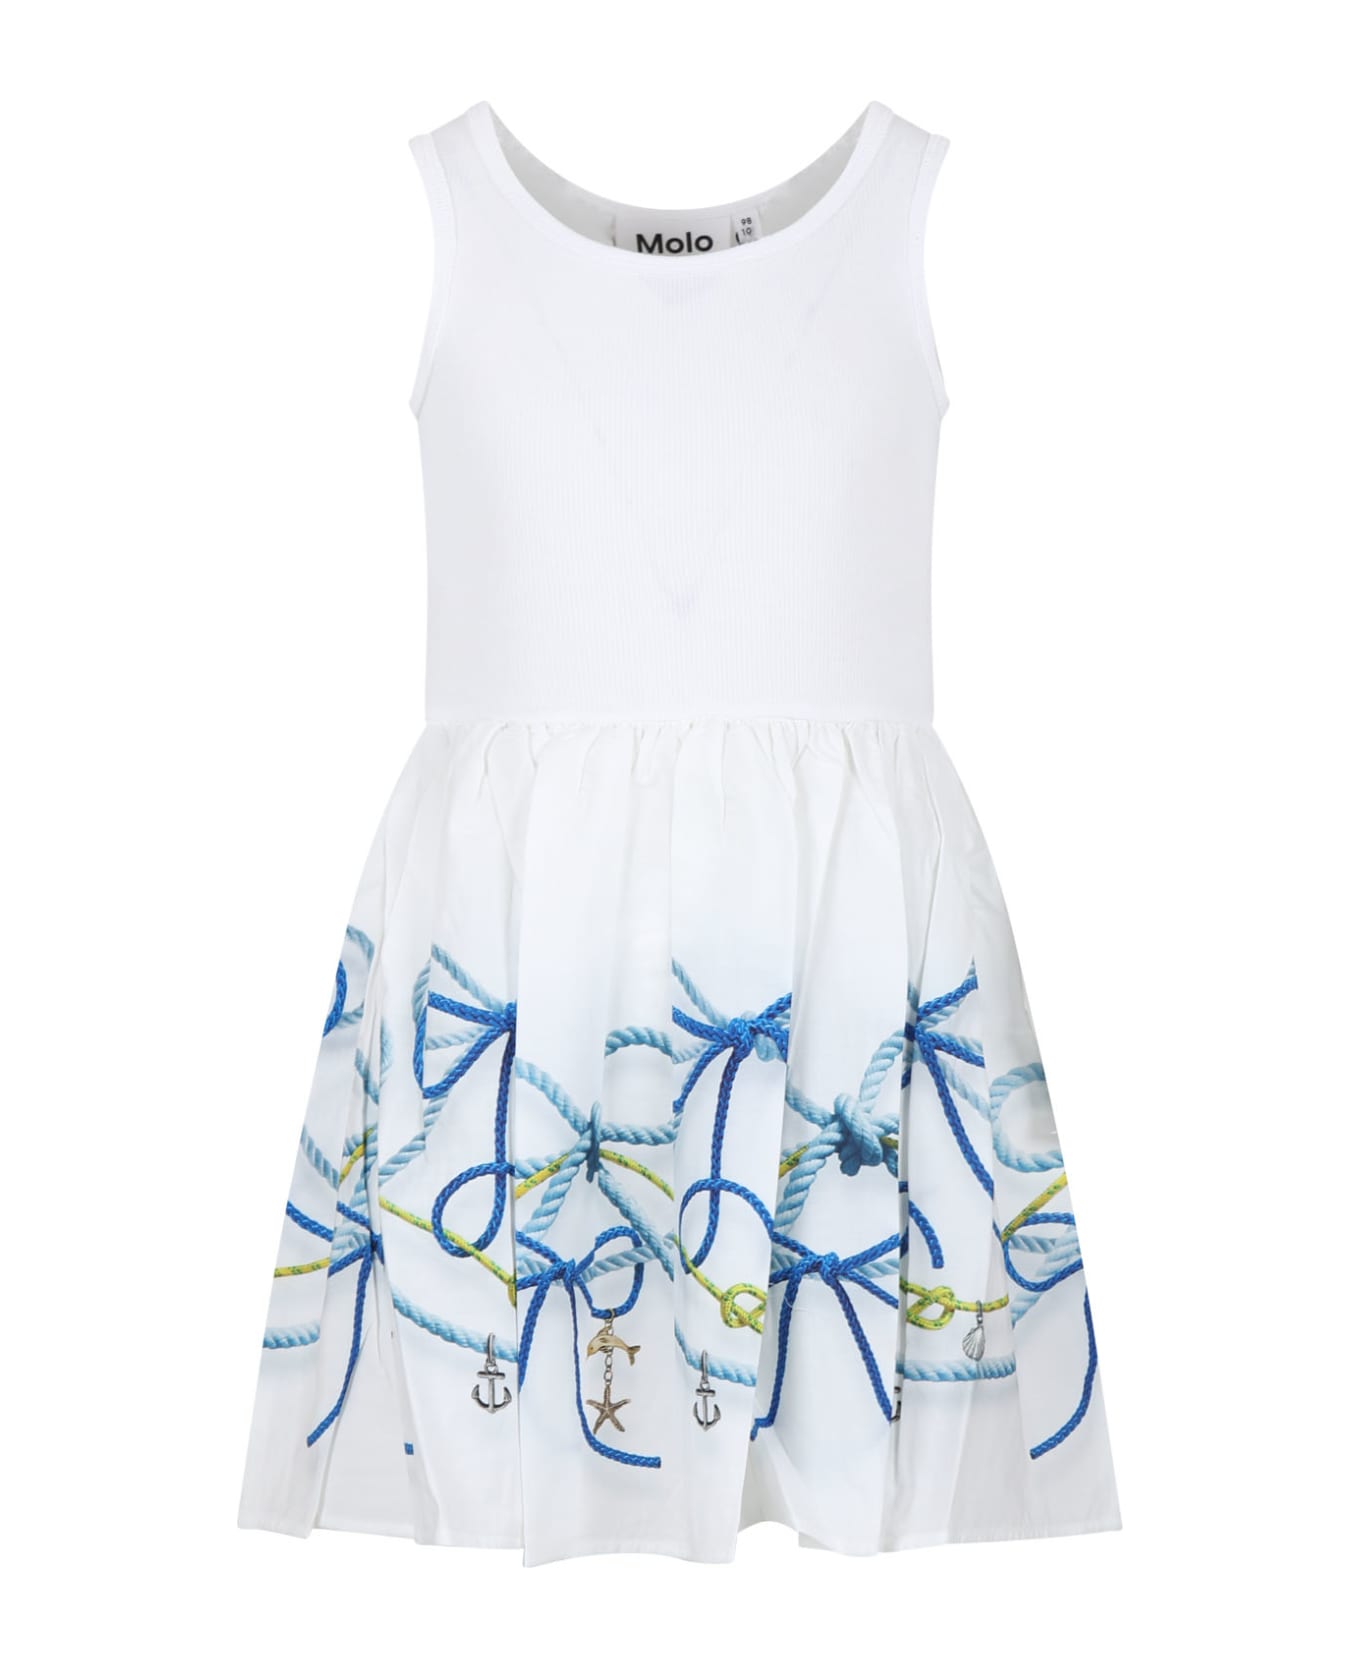 Molo White Dress For Girl With Bows Print - White